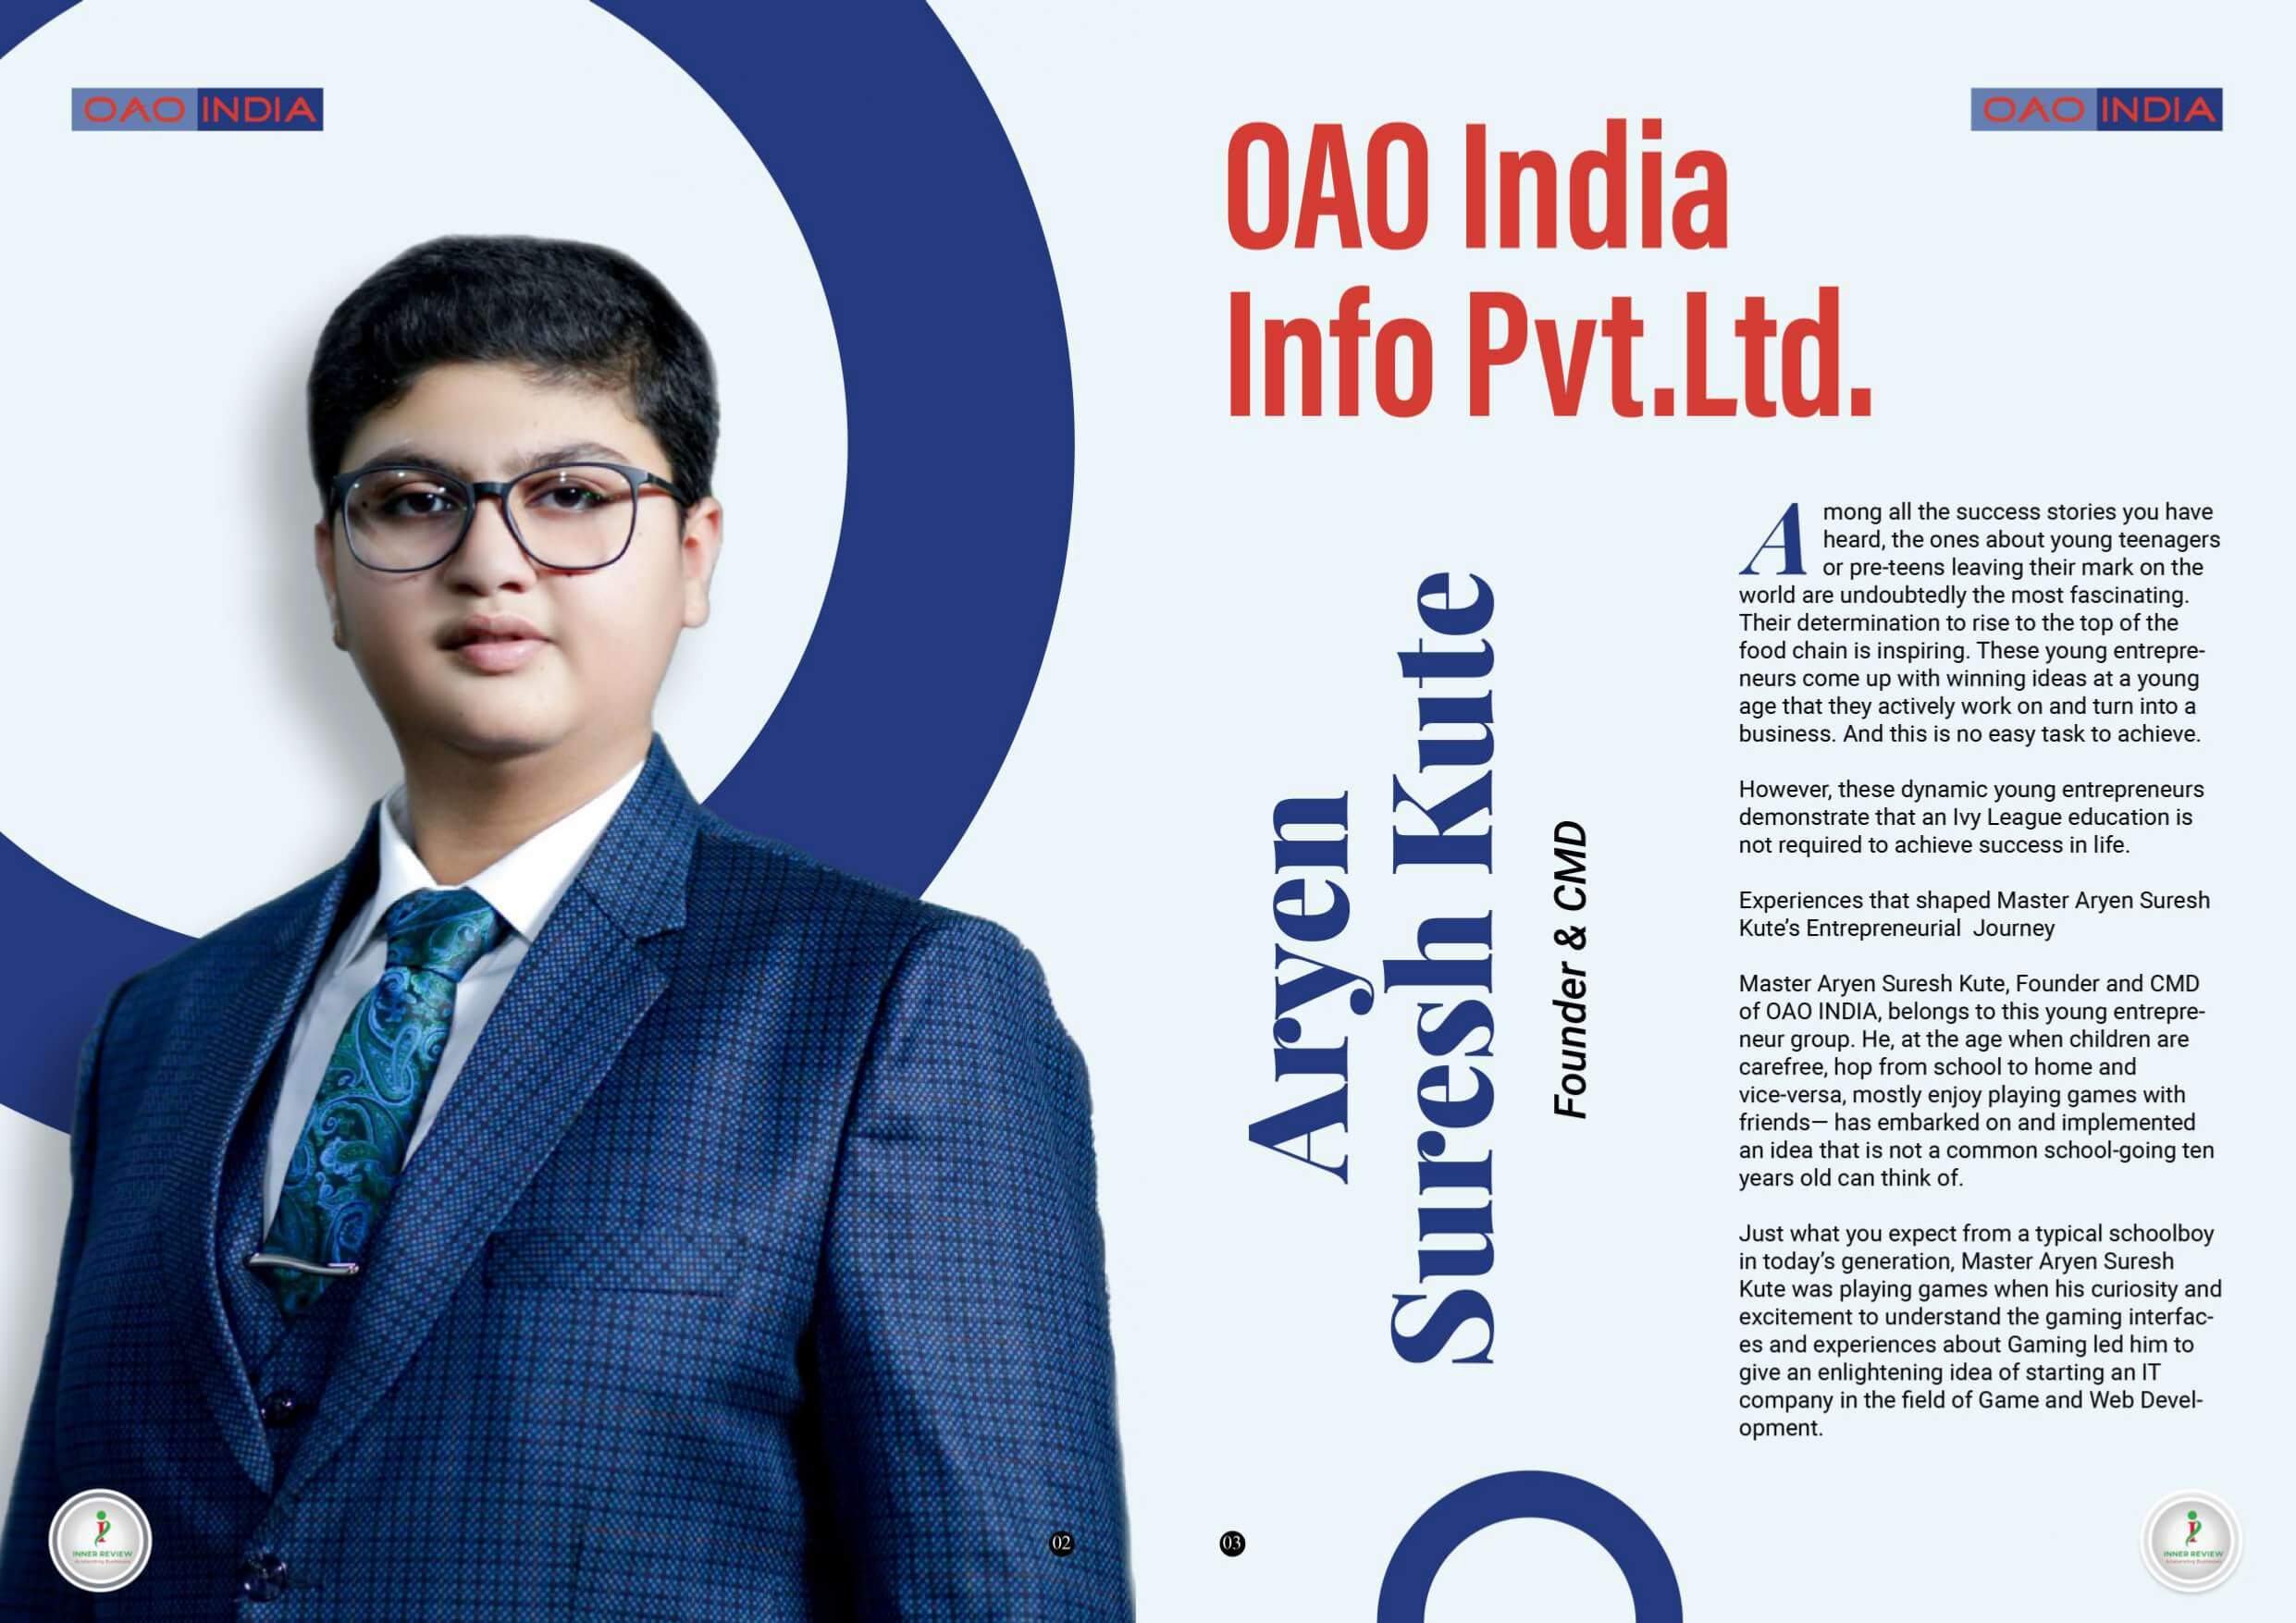 Inner Review 2022 magazine featuring Master Aryen Suresh Kute (Founder & CMD – OAO INDIA)